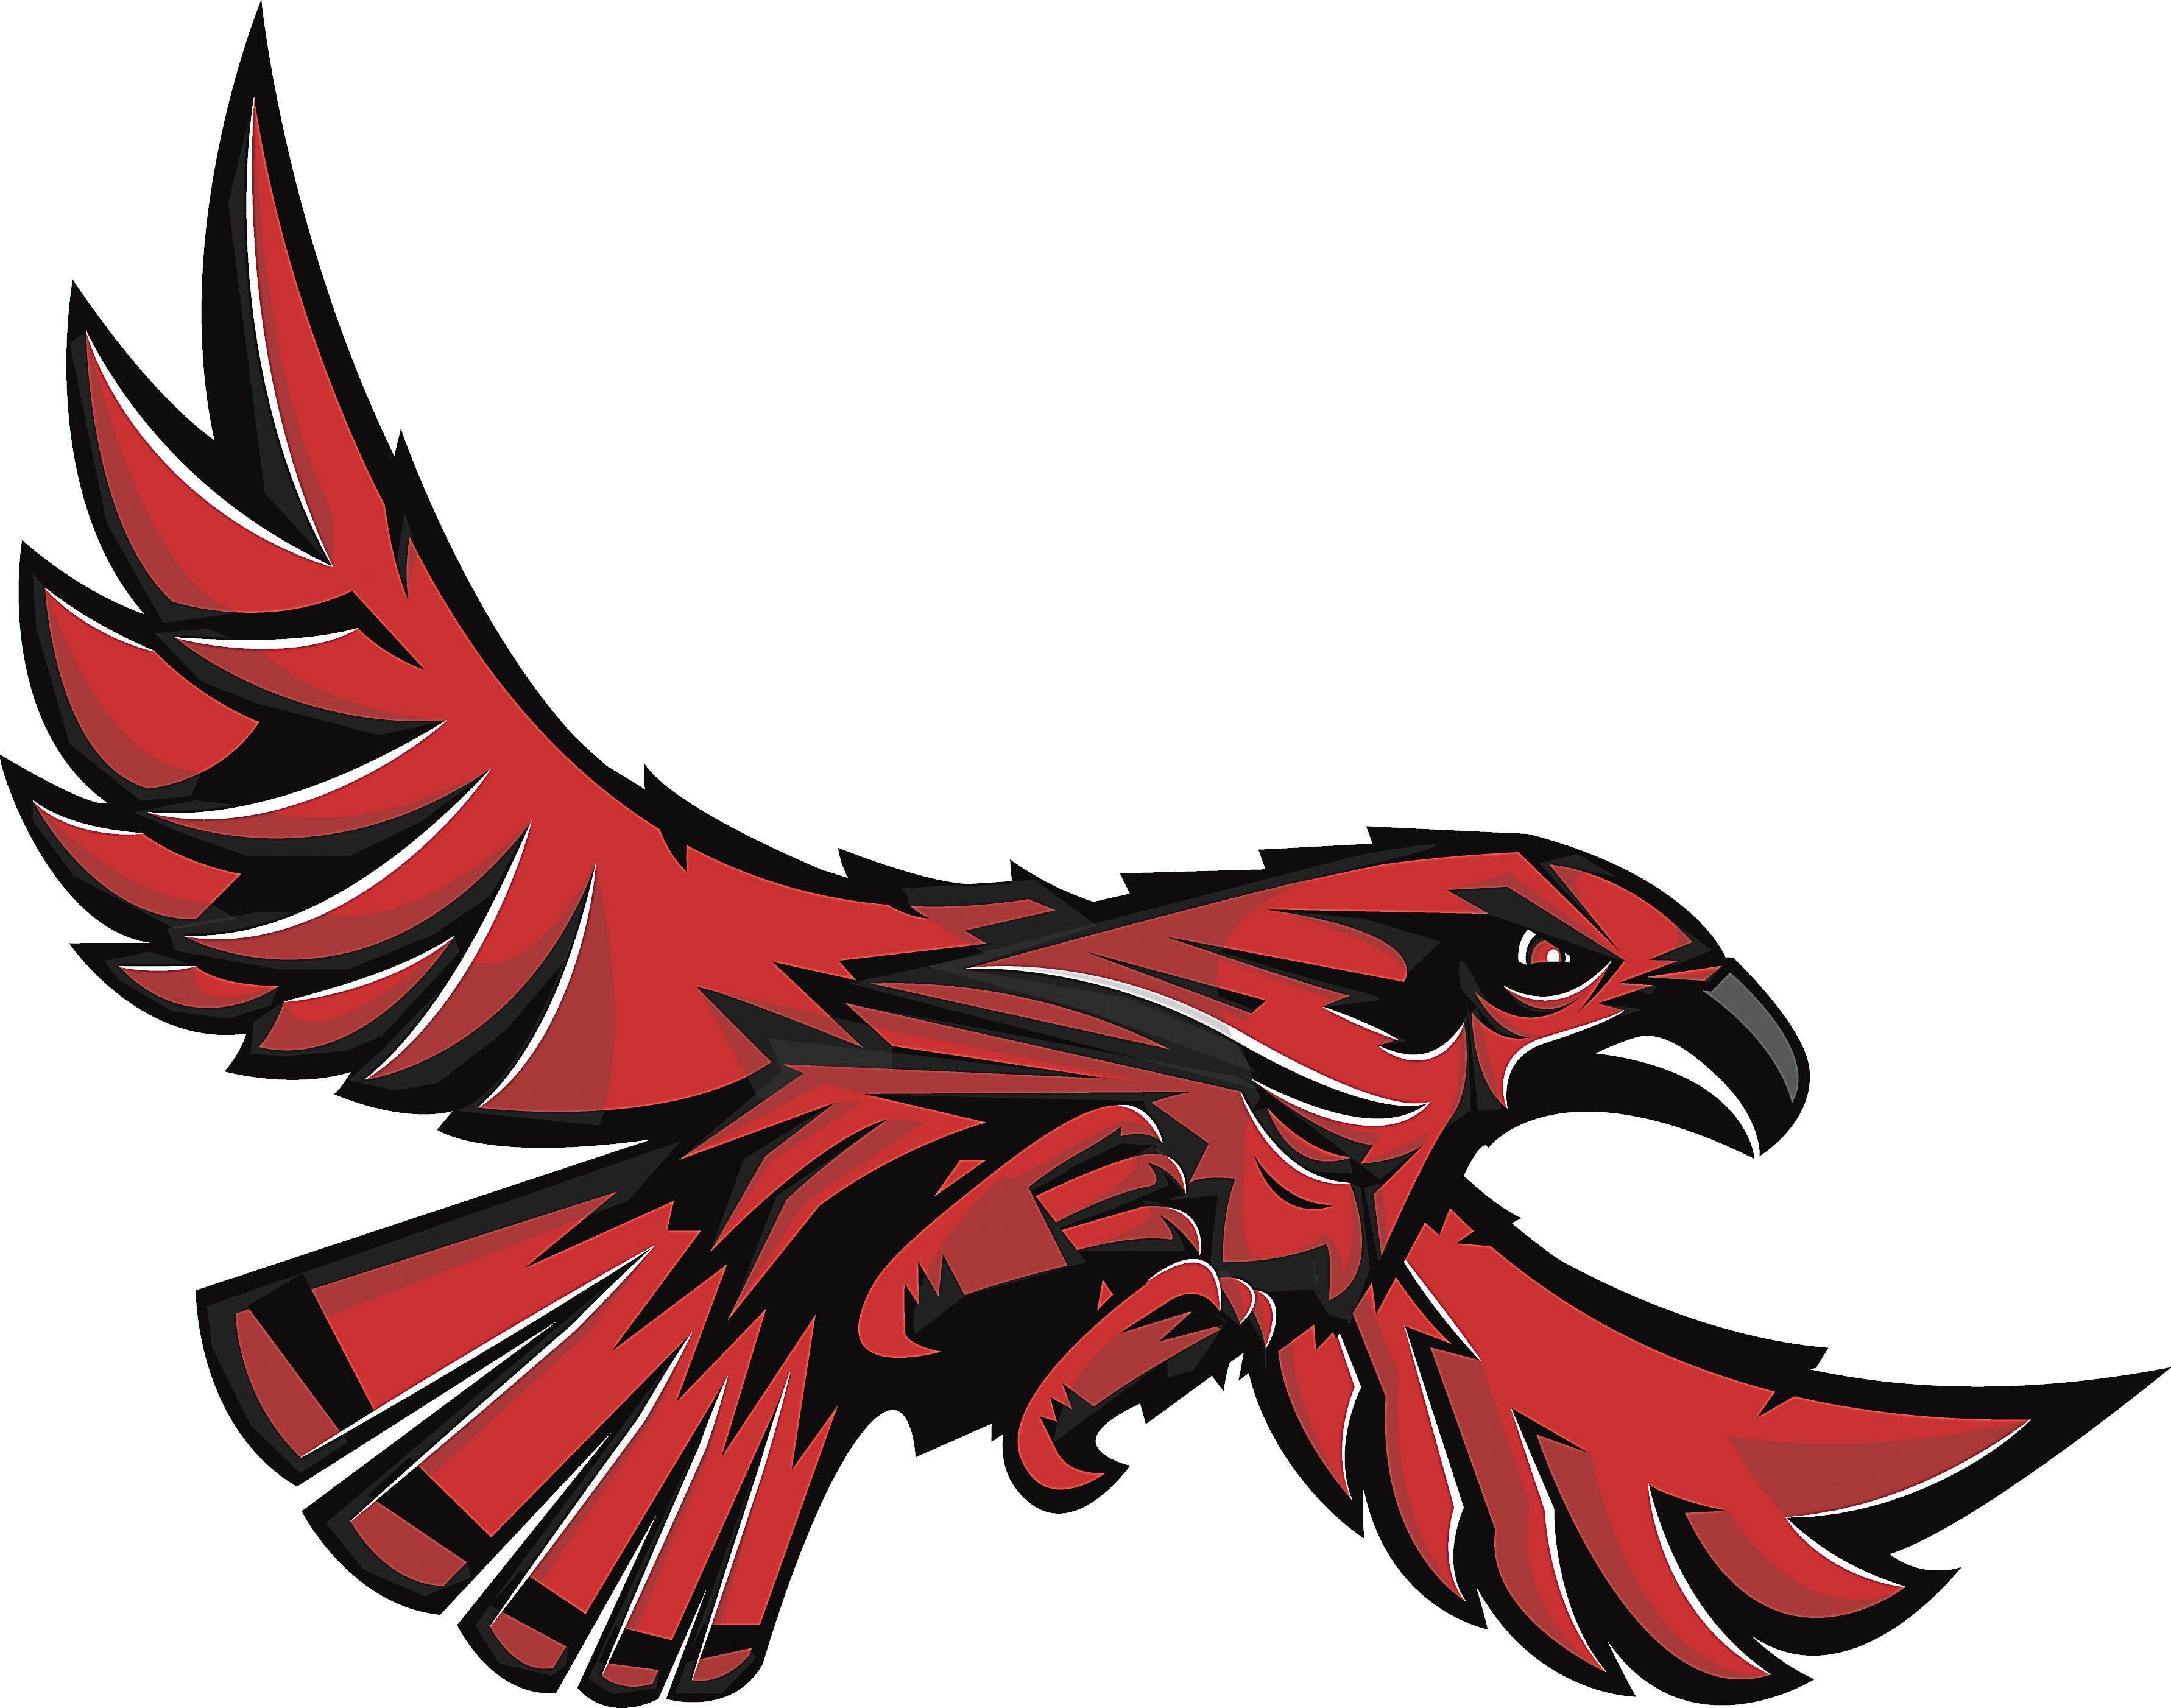 RedHawks Logo - Redhawks logo selected for Port Townsend High School. Peninsula